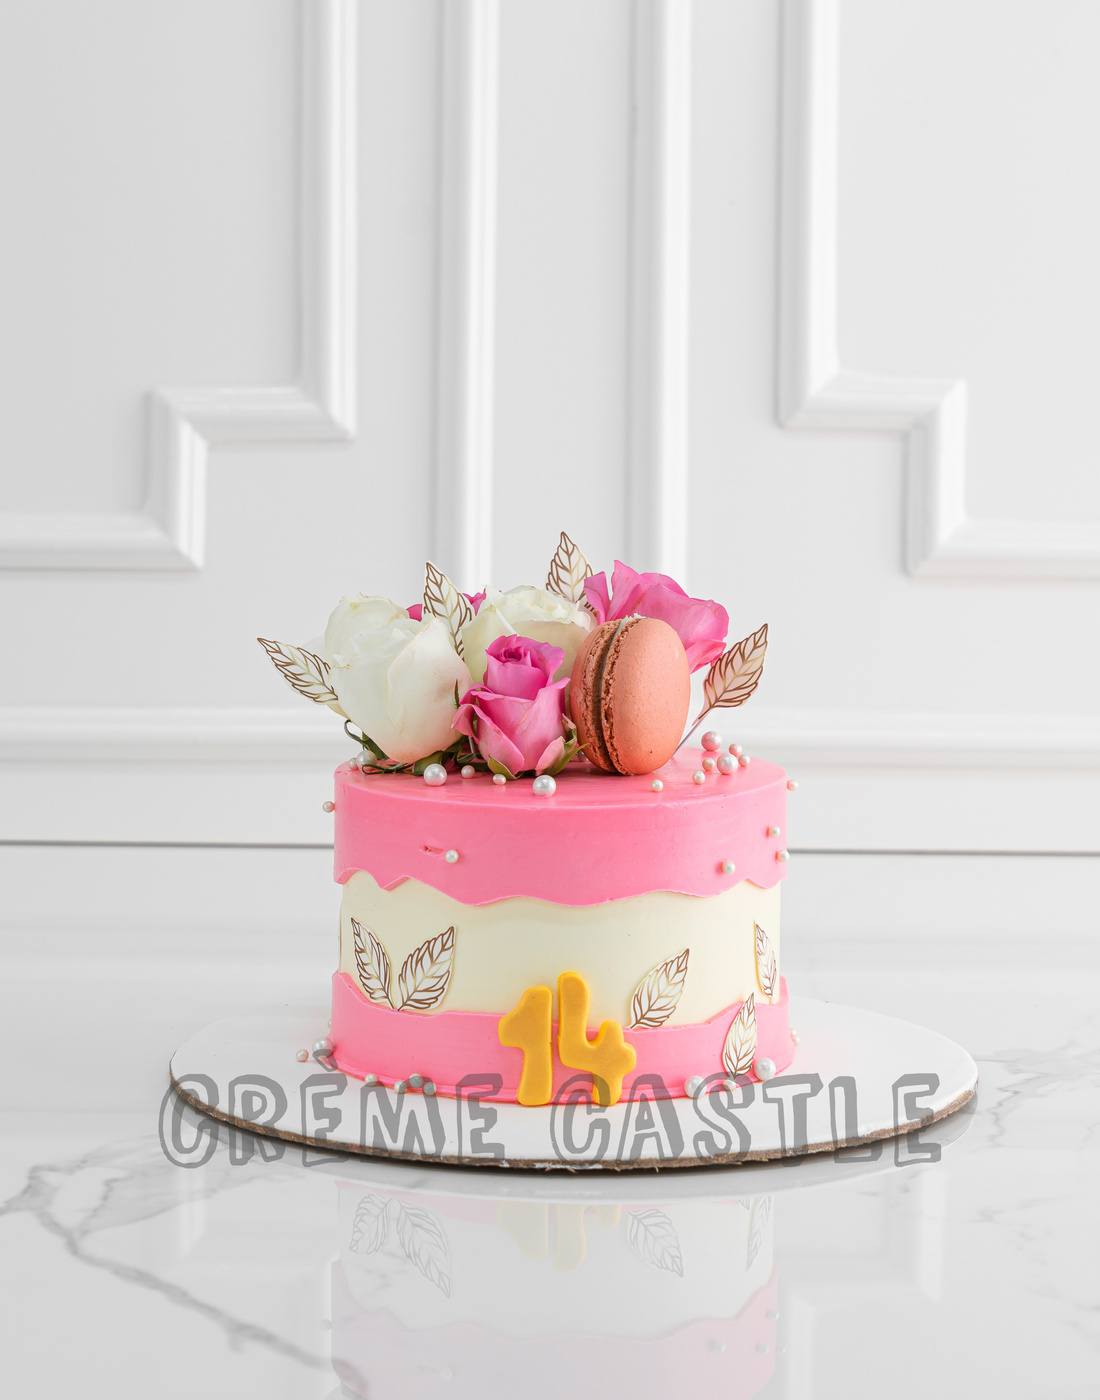 Louis Vuitton Cake – Creme Castle